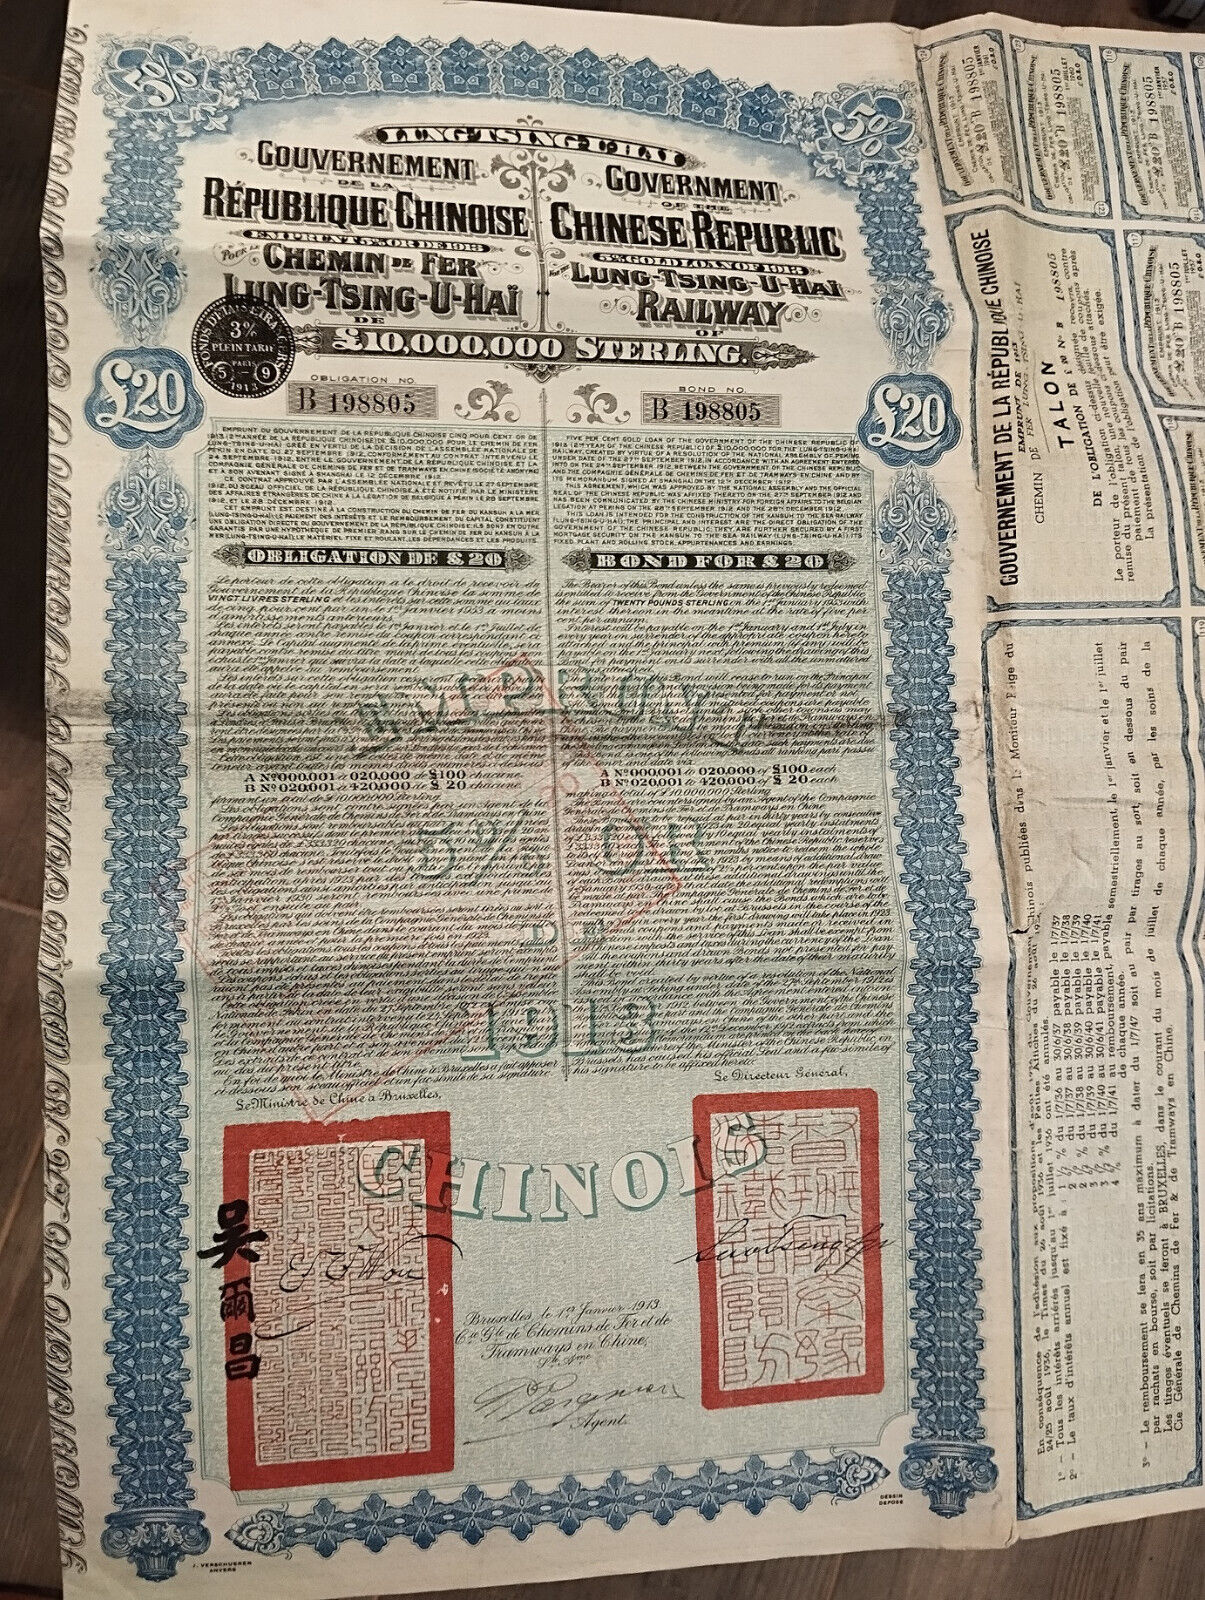 China 1913 Lung Tsing U Hai Railway Super Petchili with 42 Coupons Bond Loan